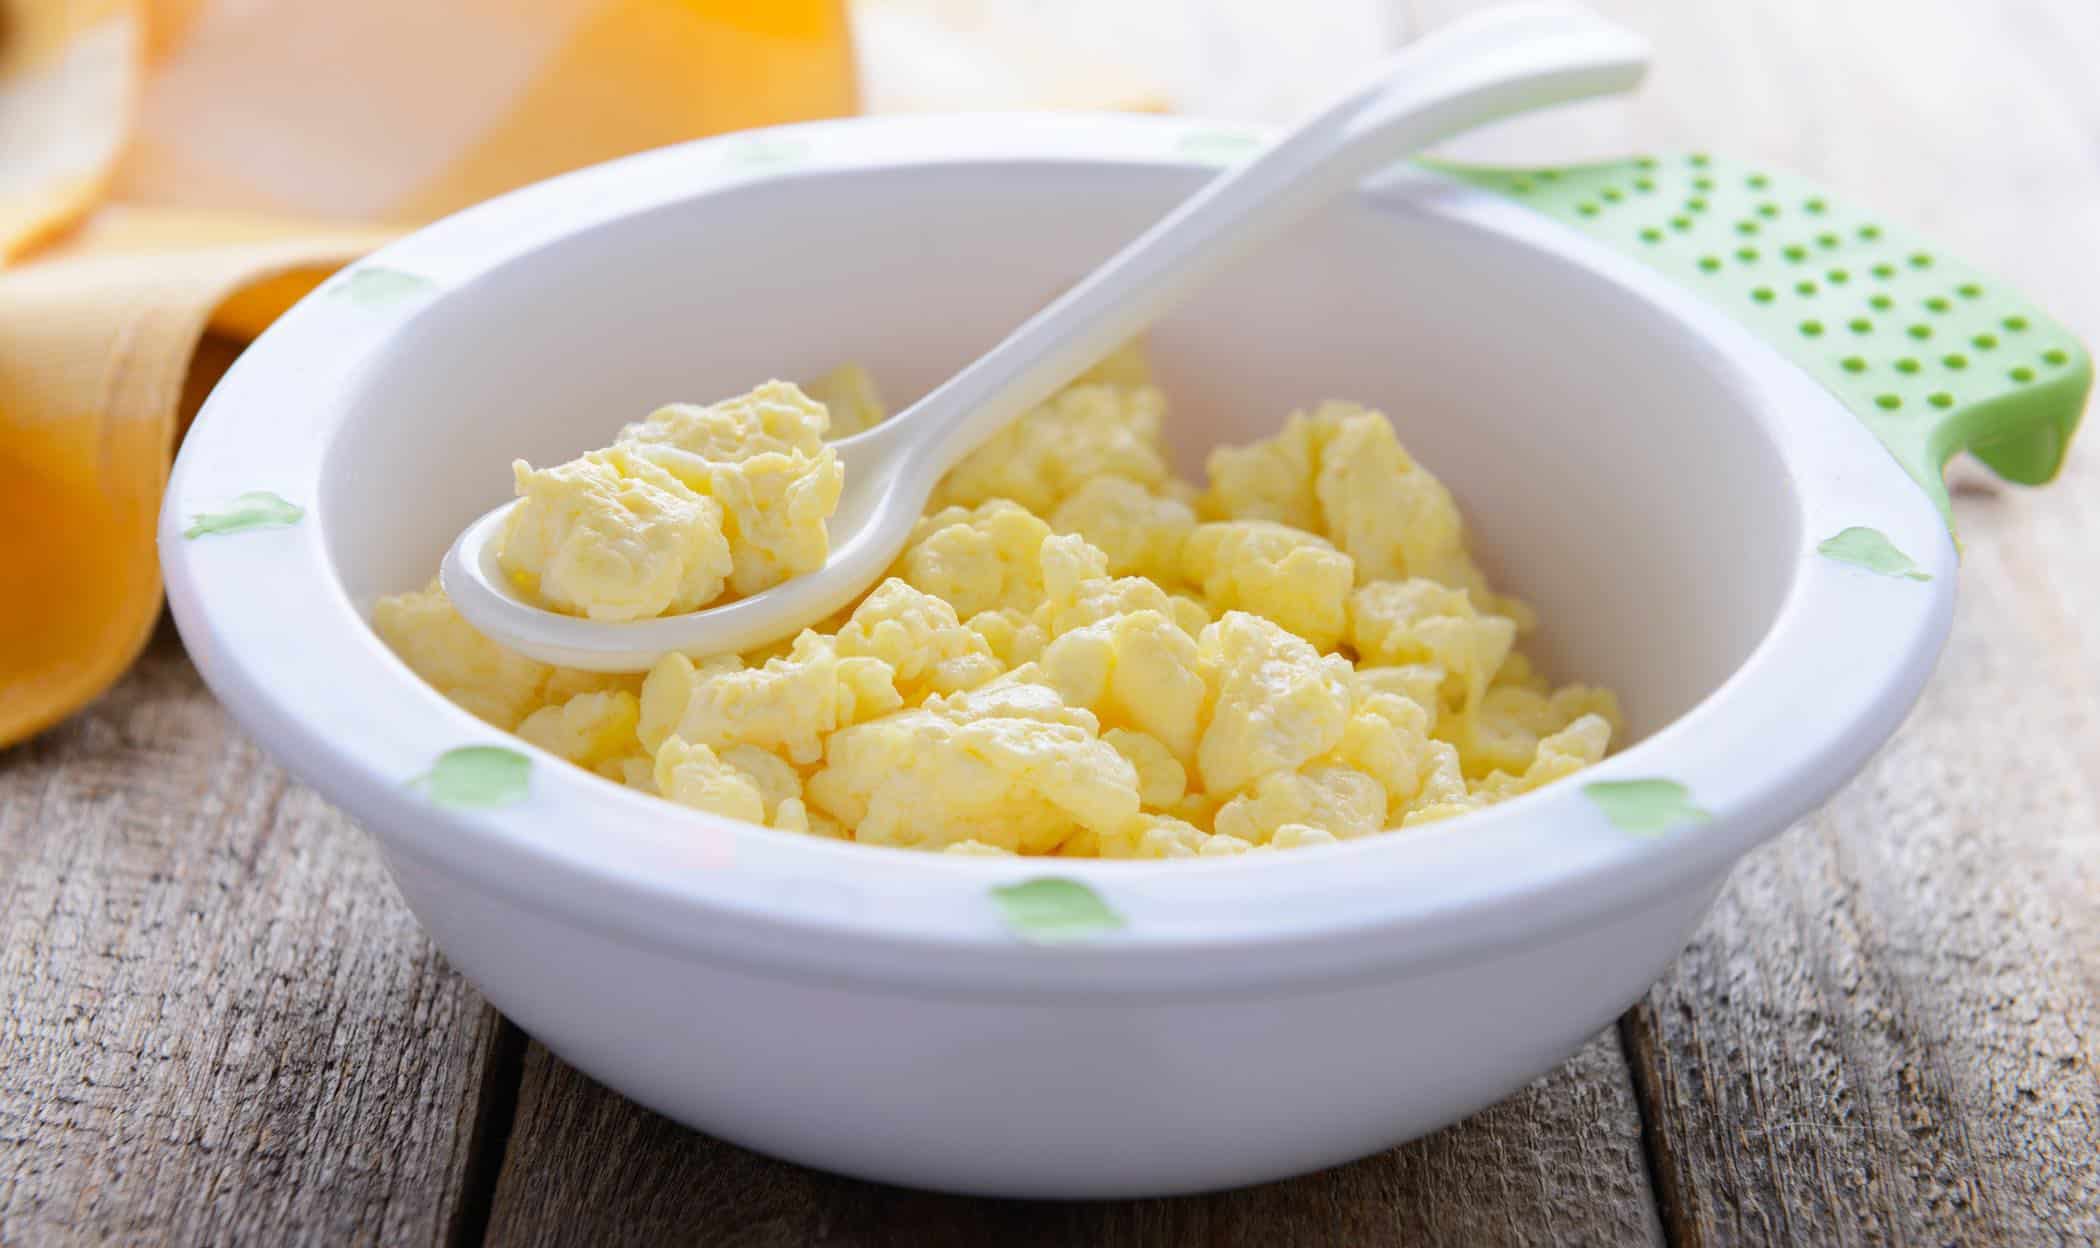 scrambled eggs in a child's bowl